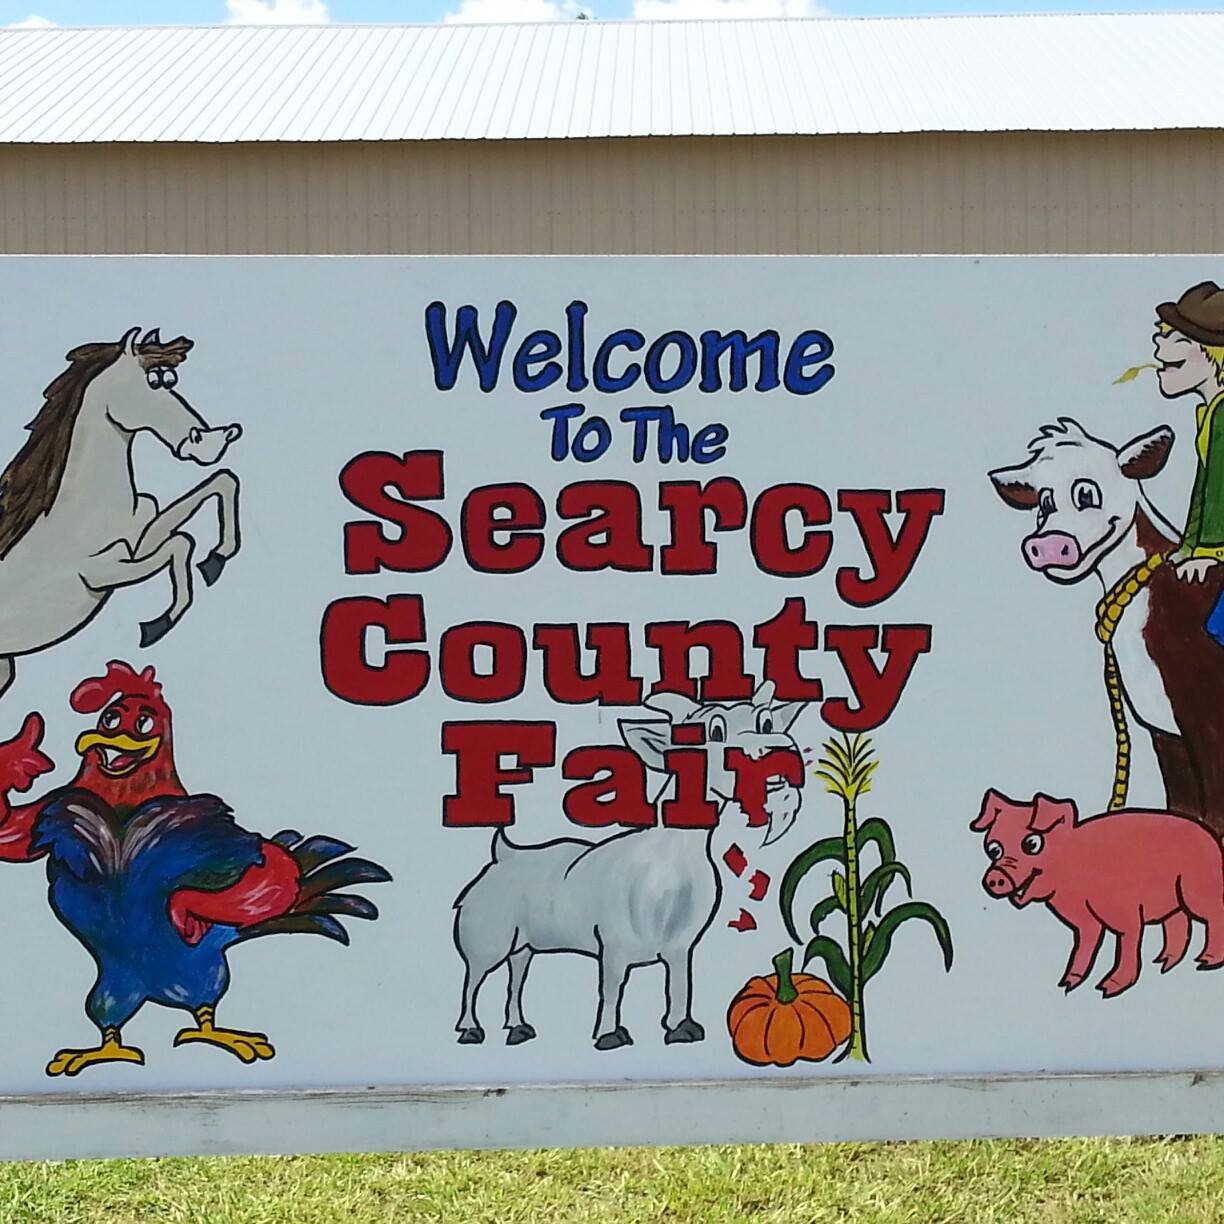 Searcy County Fair